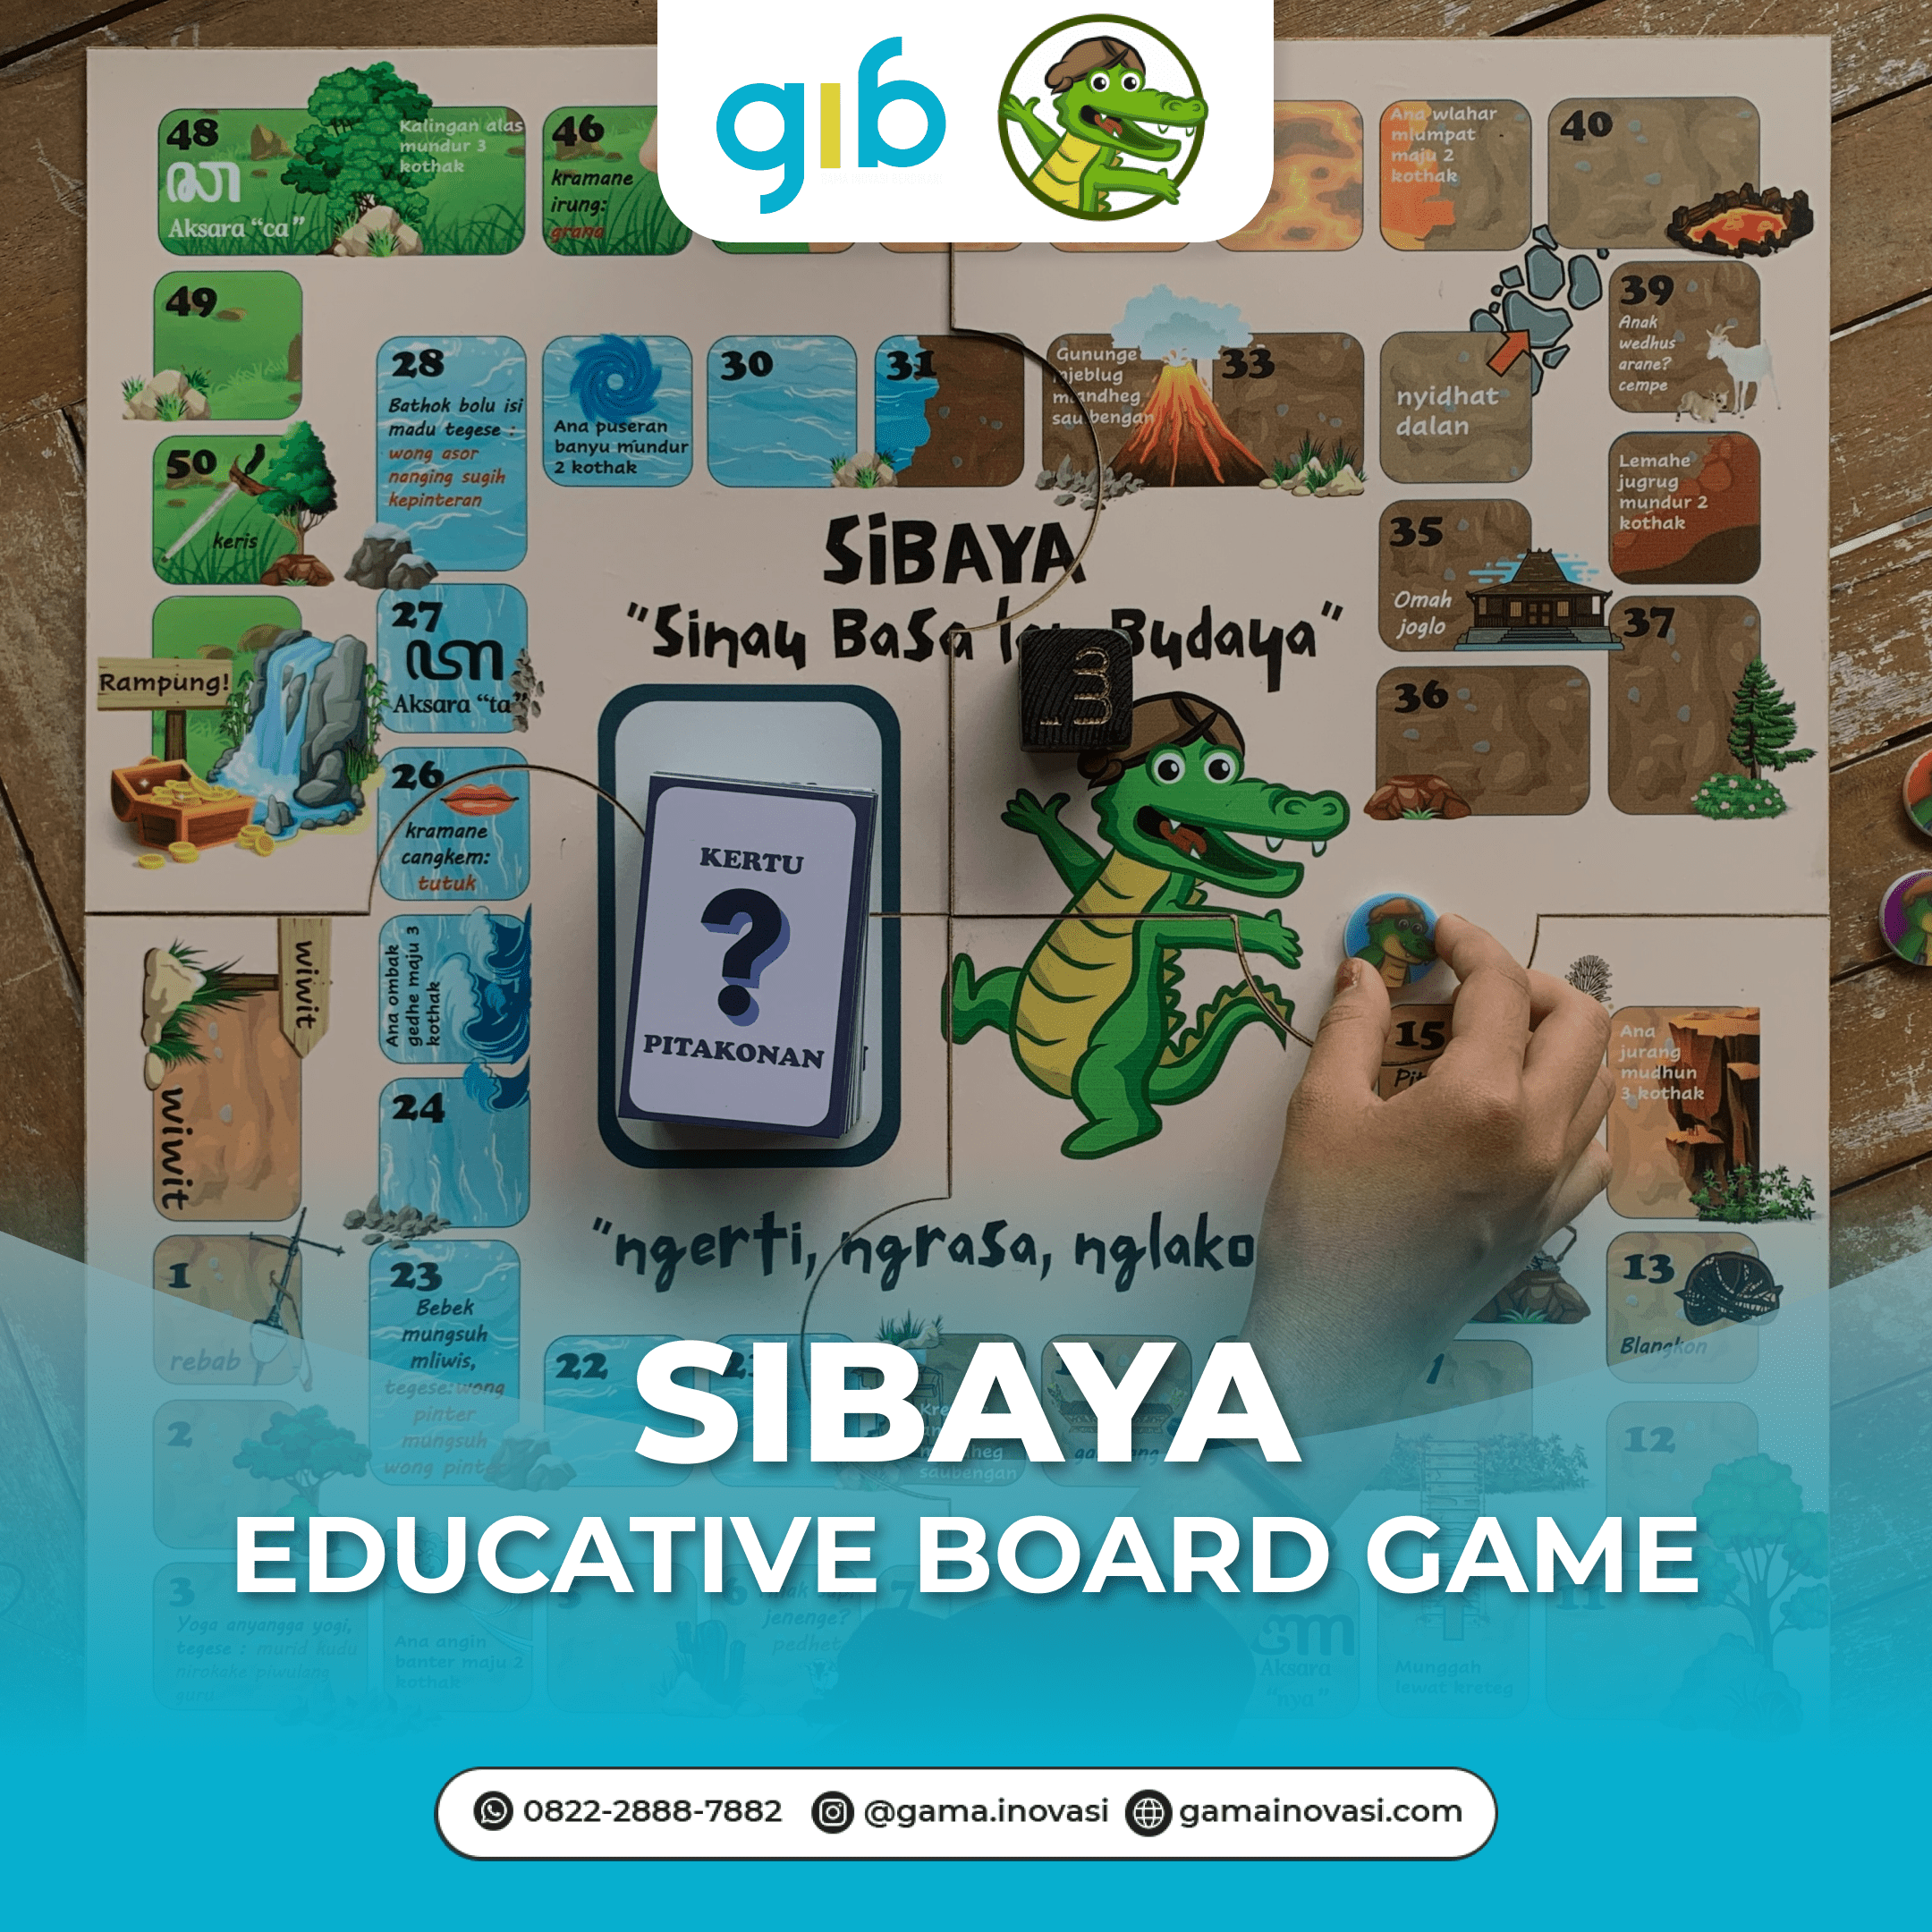 SIBAYA: Educative Board Game